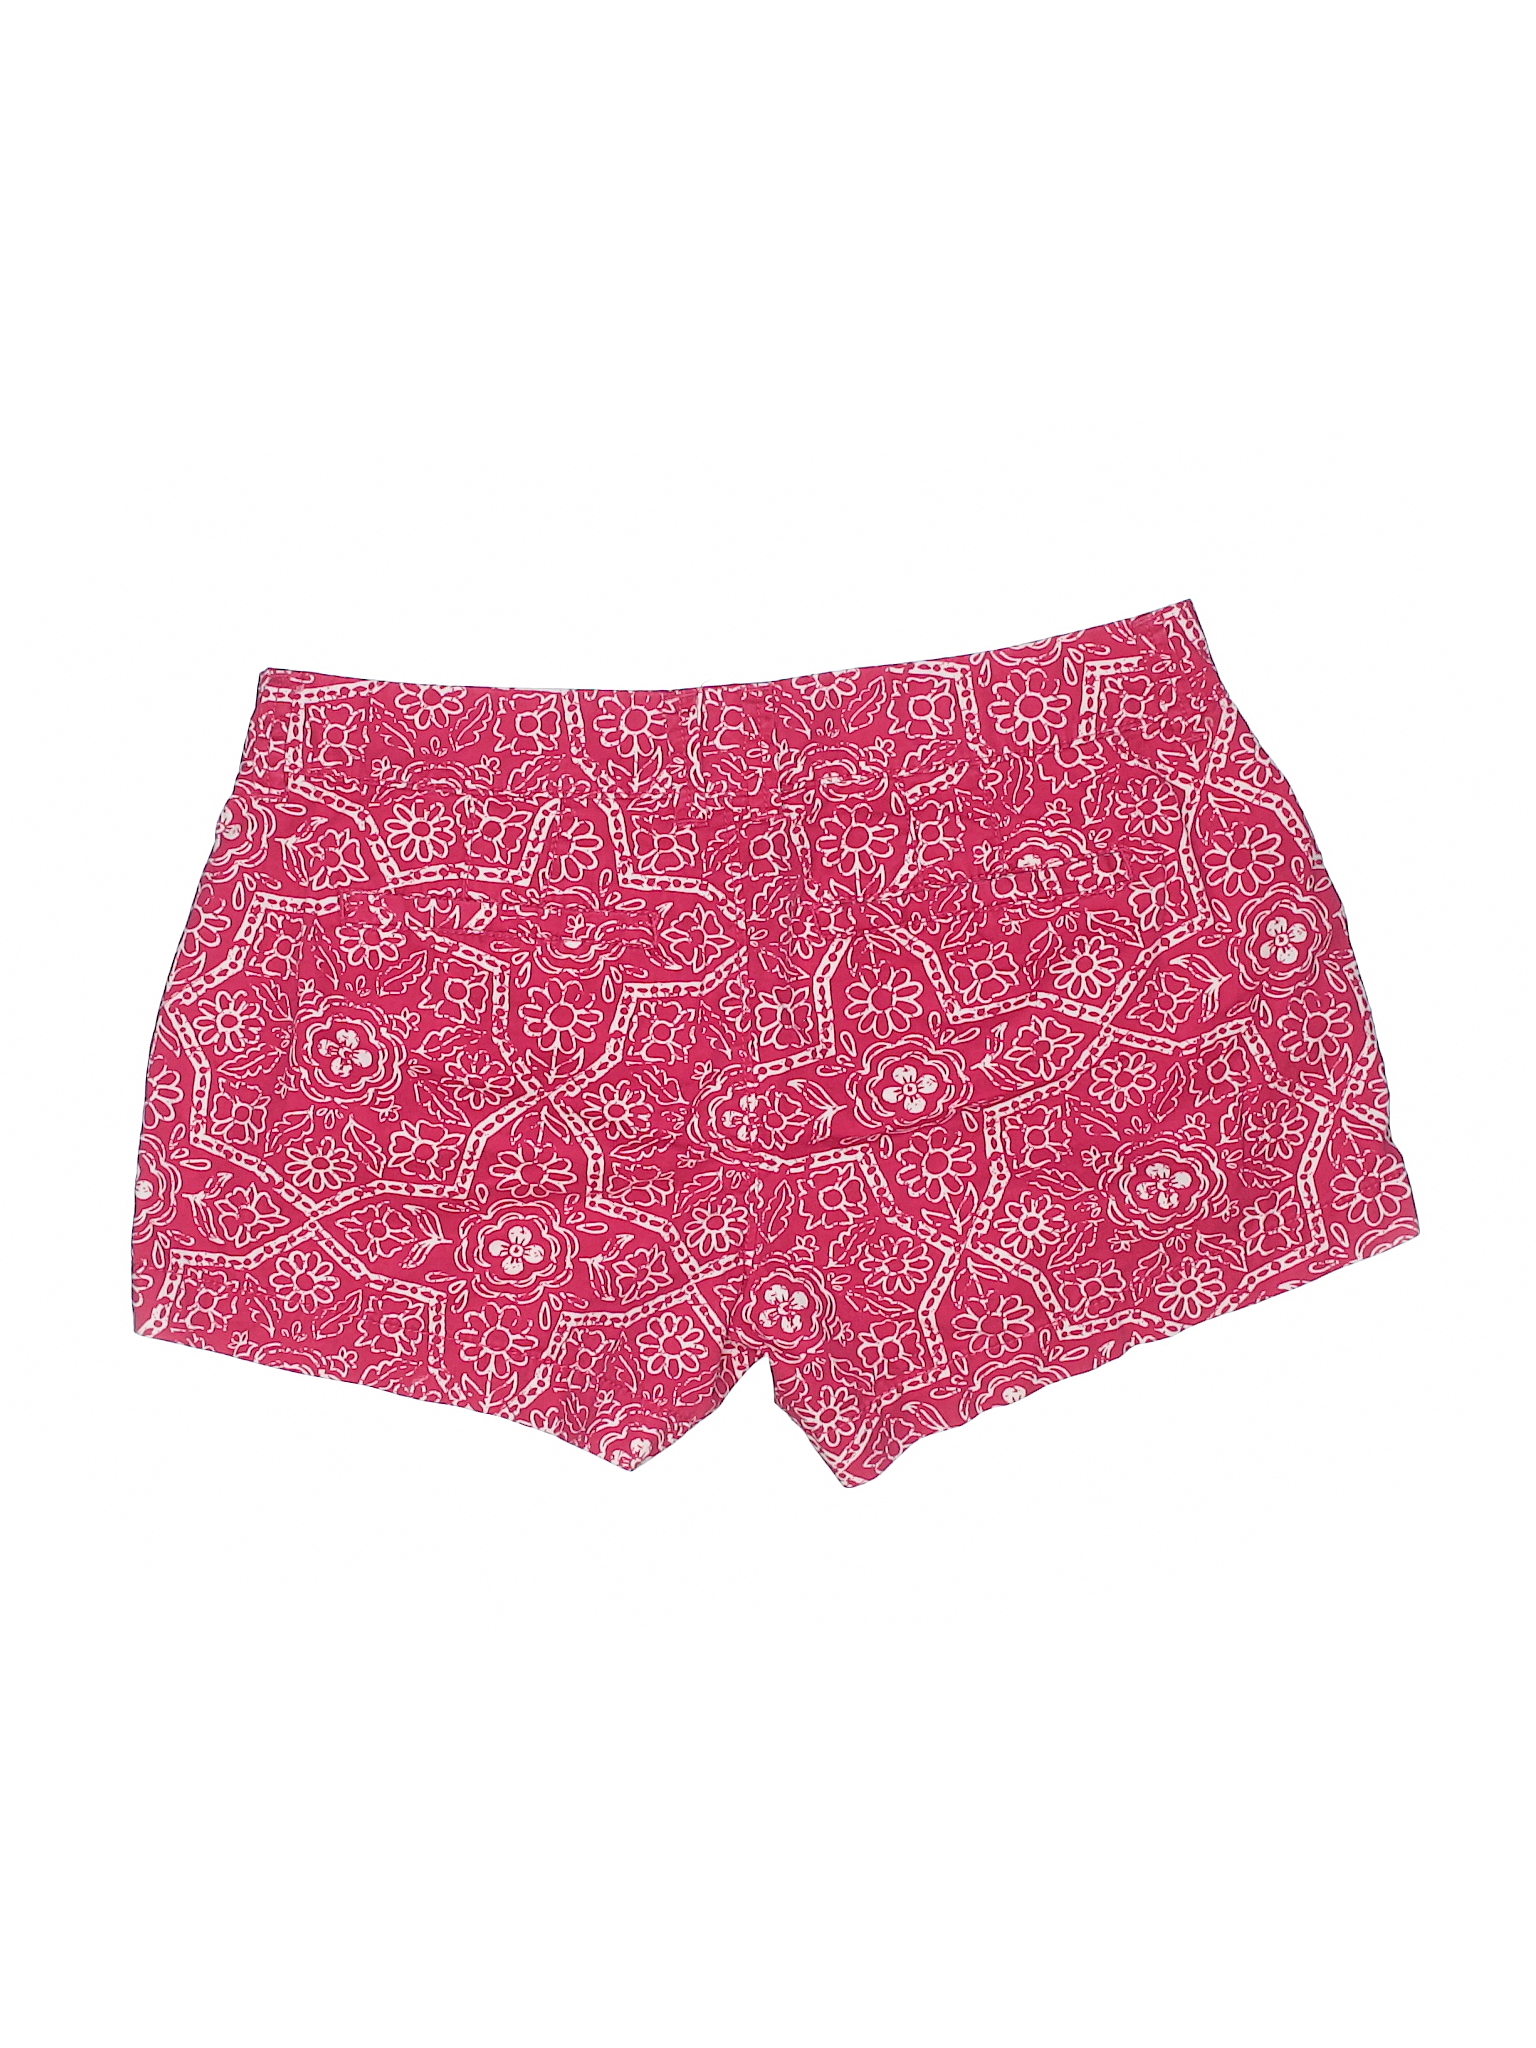 Old Navy Khaki Shorts: Size 2.00 Pink Women's Bottoms - $6.99 ...